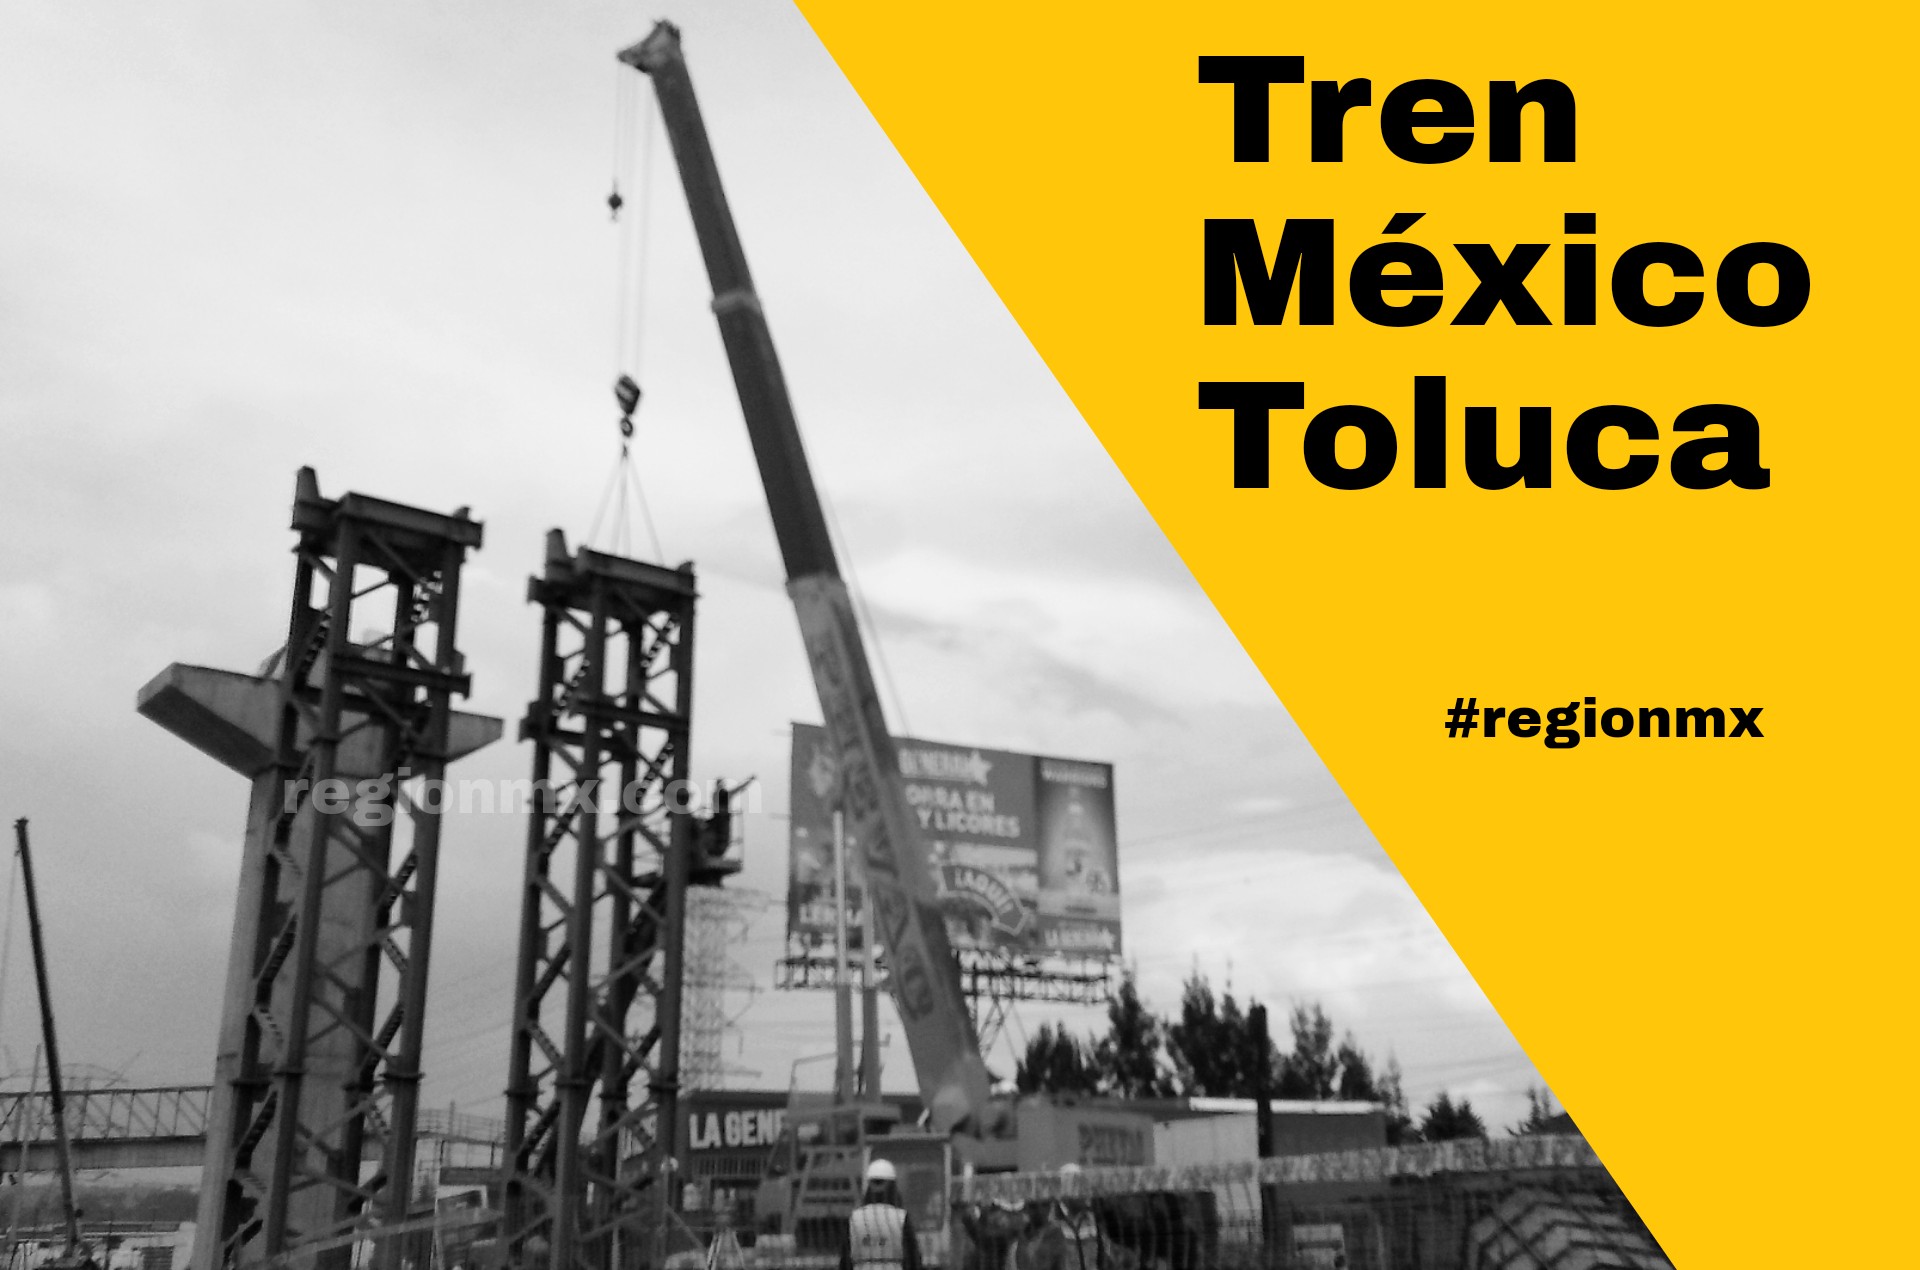 Así luce el avance del Tren Interurbano México - Toluca #regionmx